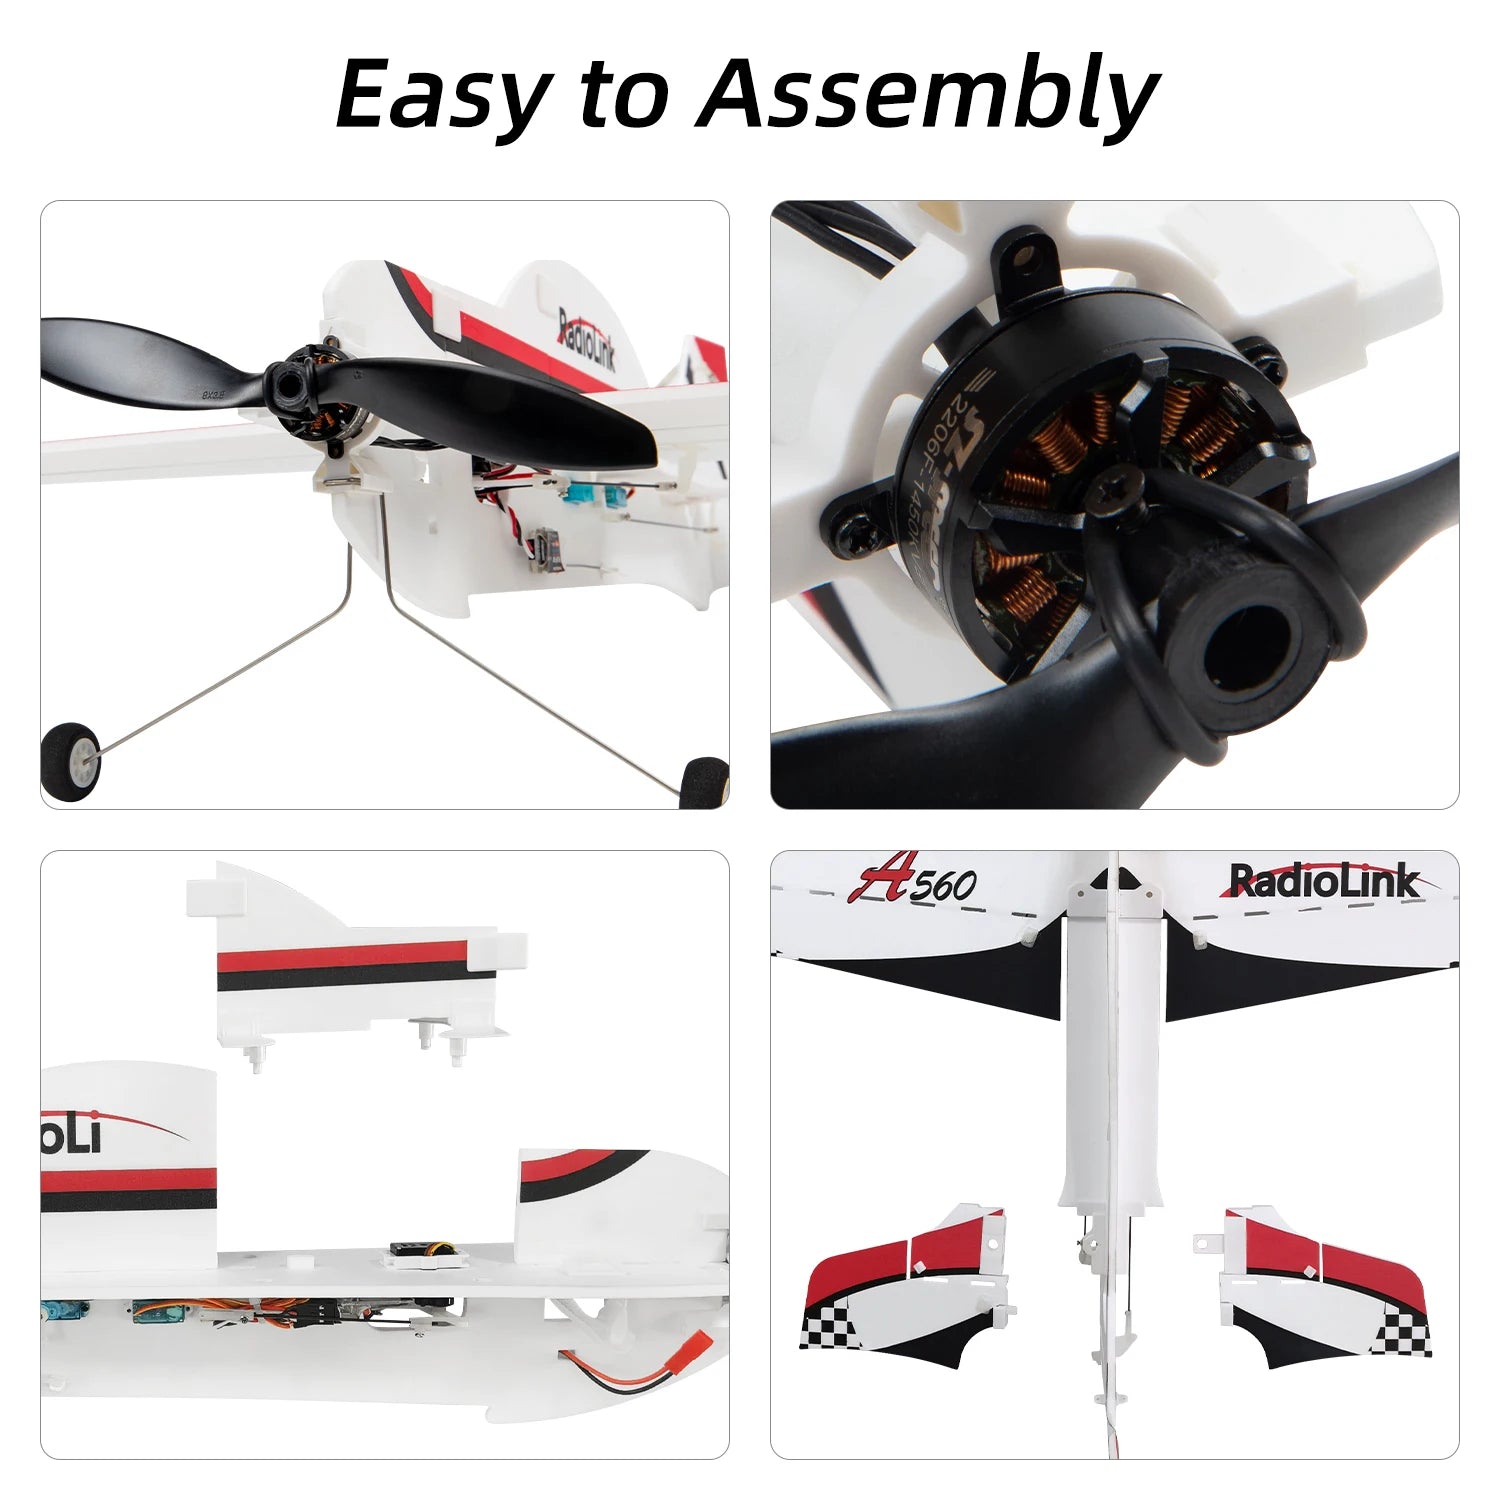 Radiolink A560 Airplane, 6 FLIGHT MODES: Stabilize/Gyro/Acrobat/